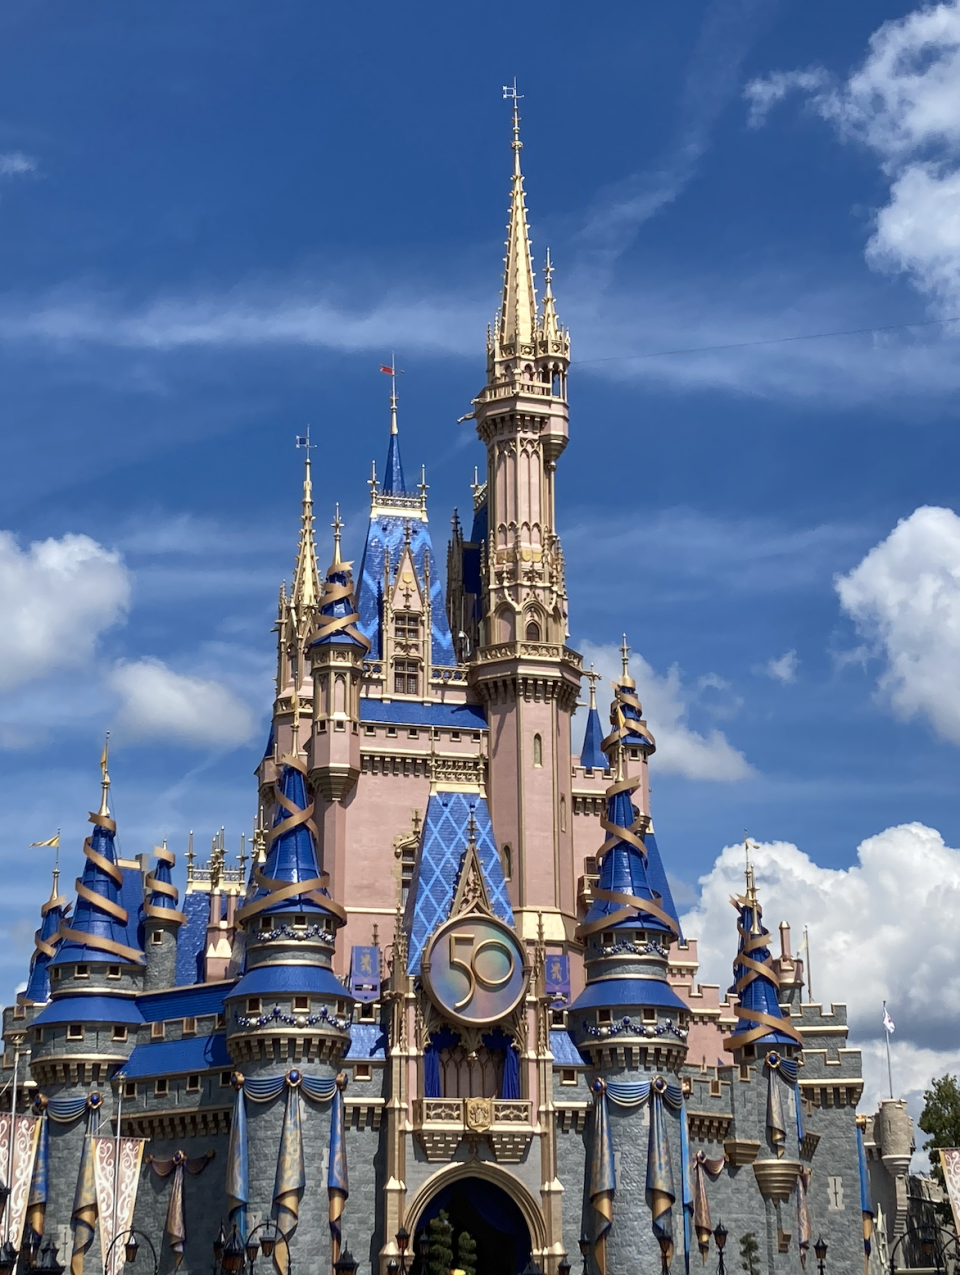 Disney's Cinderella Castle adorned with a "50" emblem for the anniversary celebration